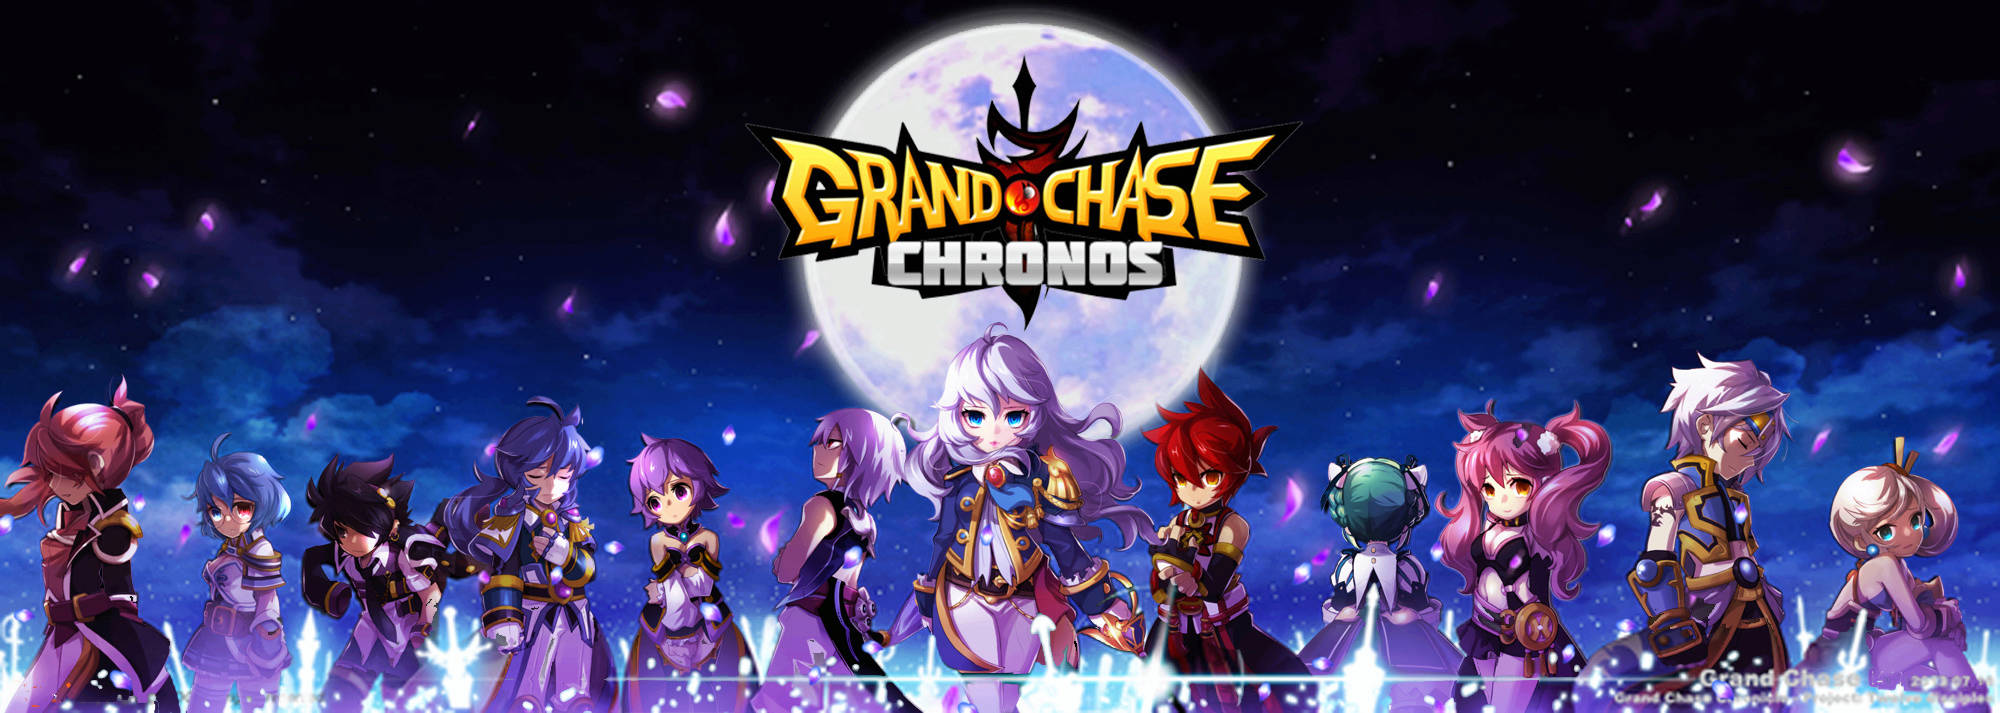 Grand Chase Chronos